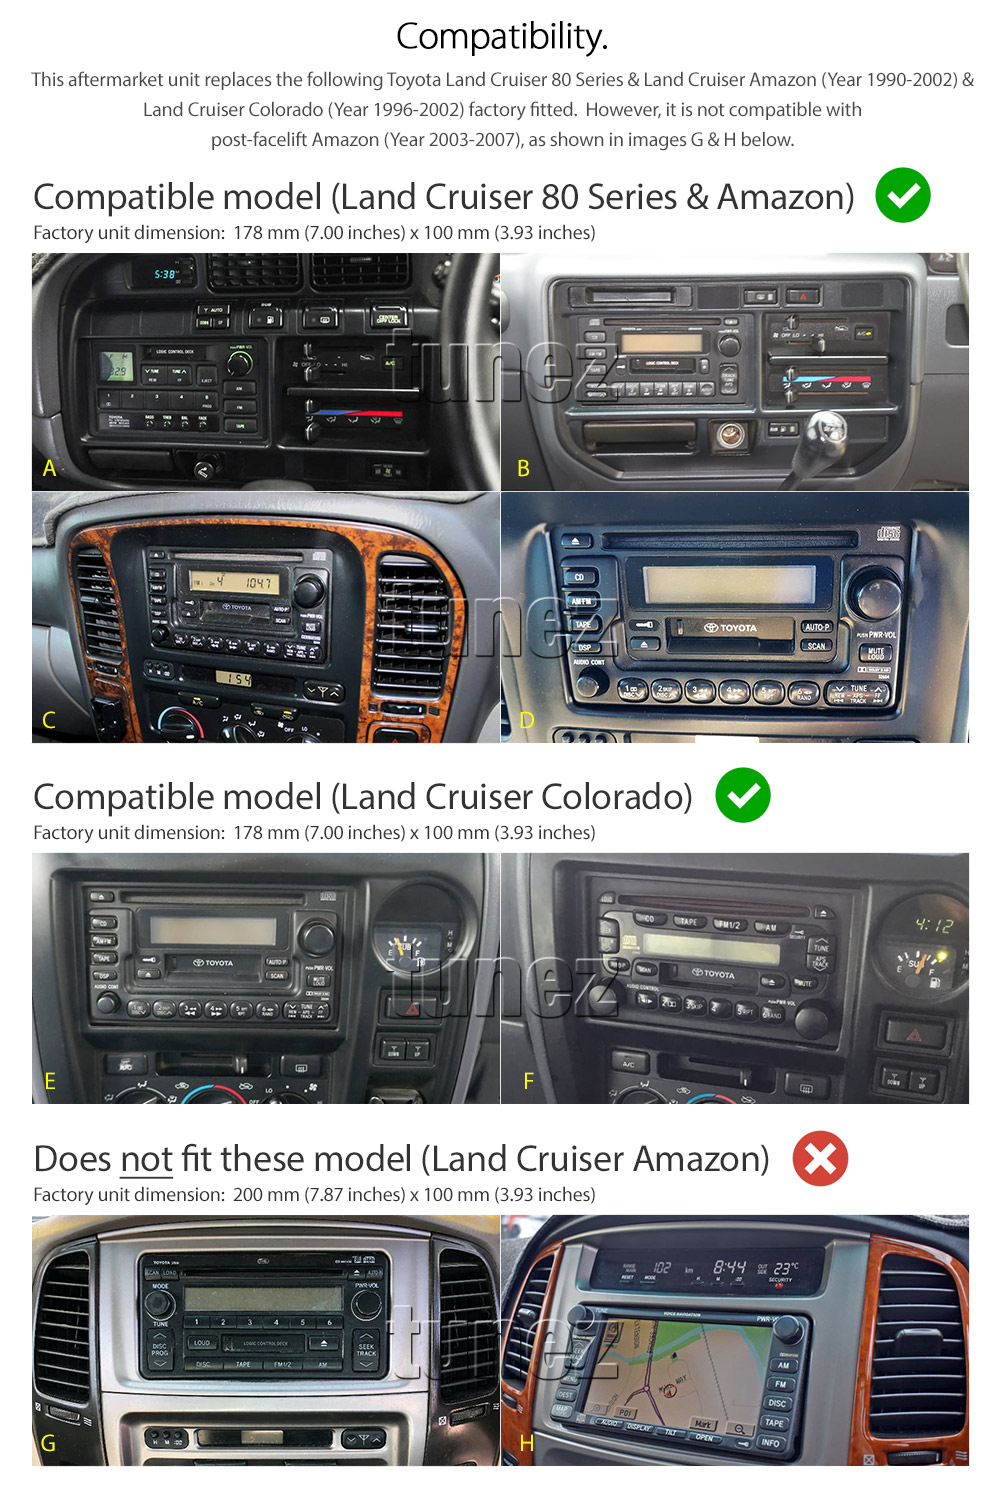 NEW Car DVD Player For Toyota Landcruiser 80 Colorado Amazon MP3 Stereo